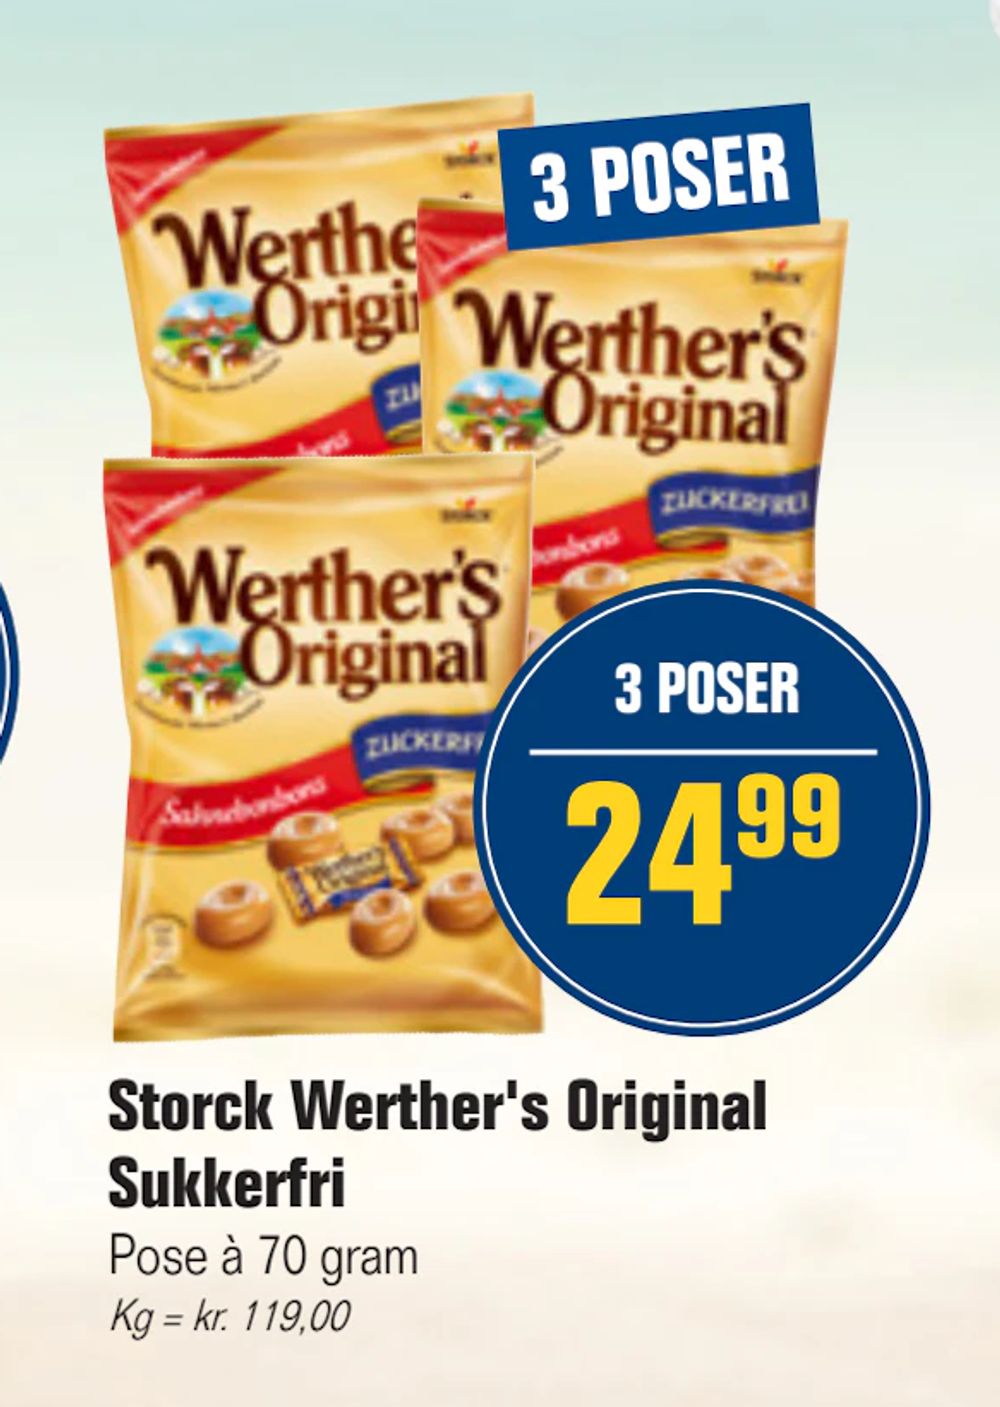 Tilbud på Storck Werther's Original Sukkerfri fra Otto Duborg til 24,99 kr.